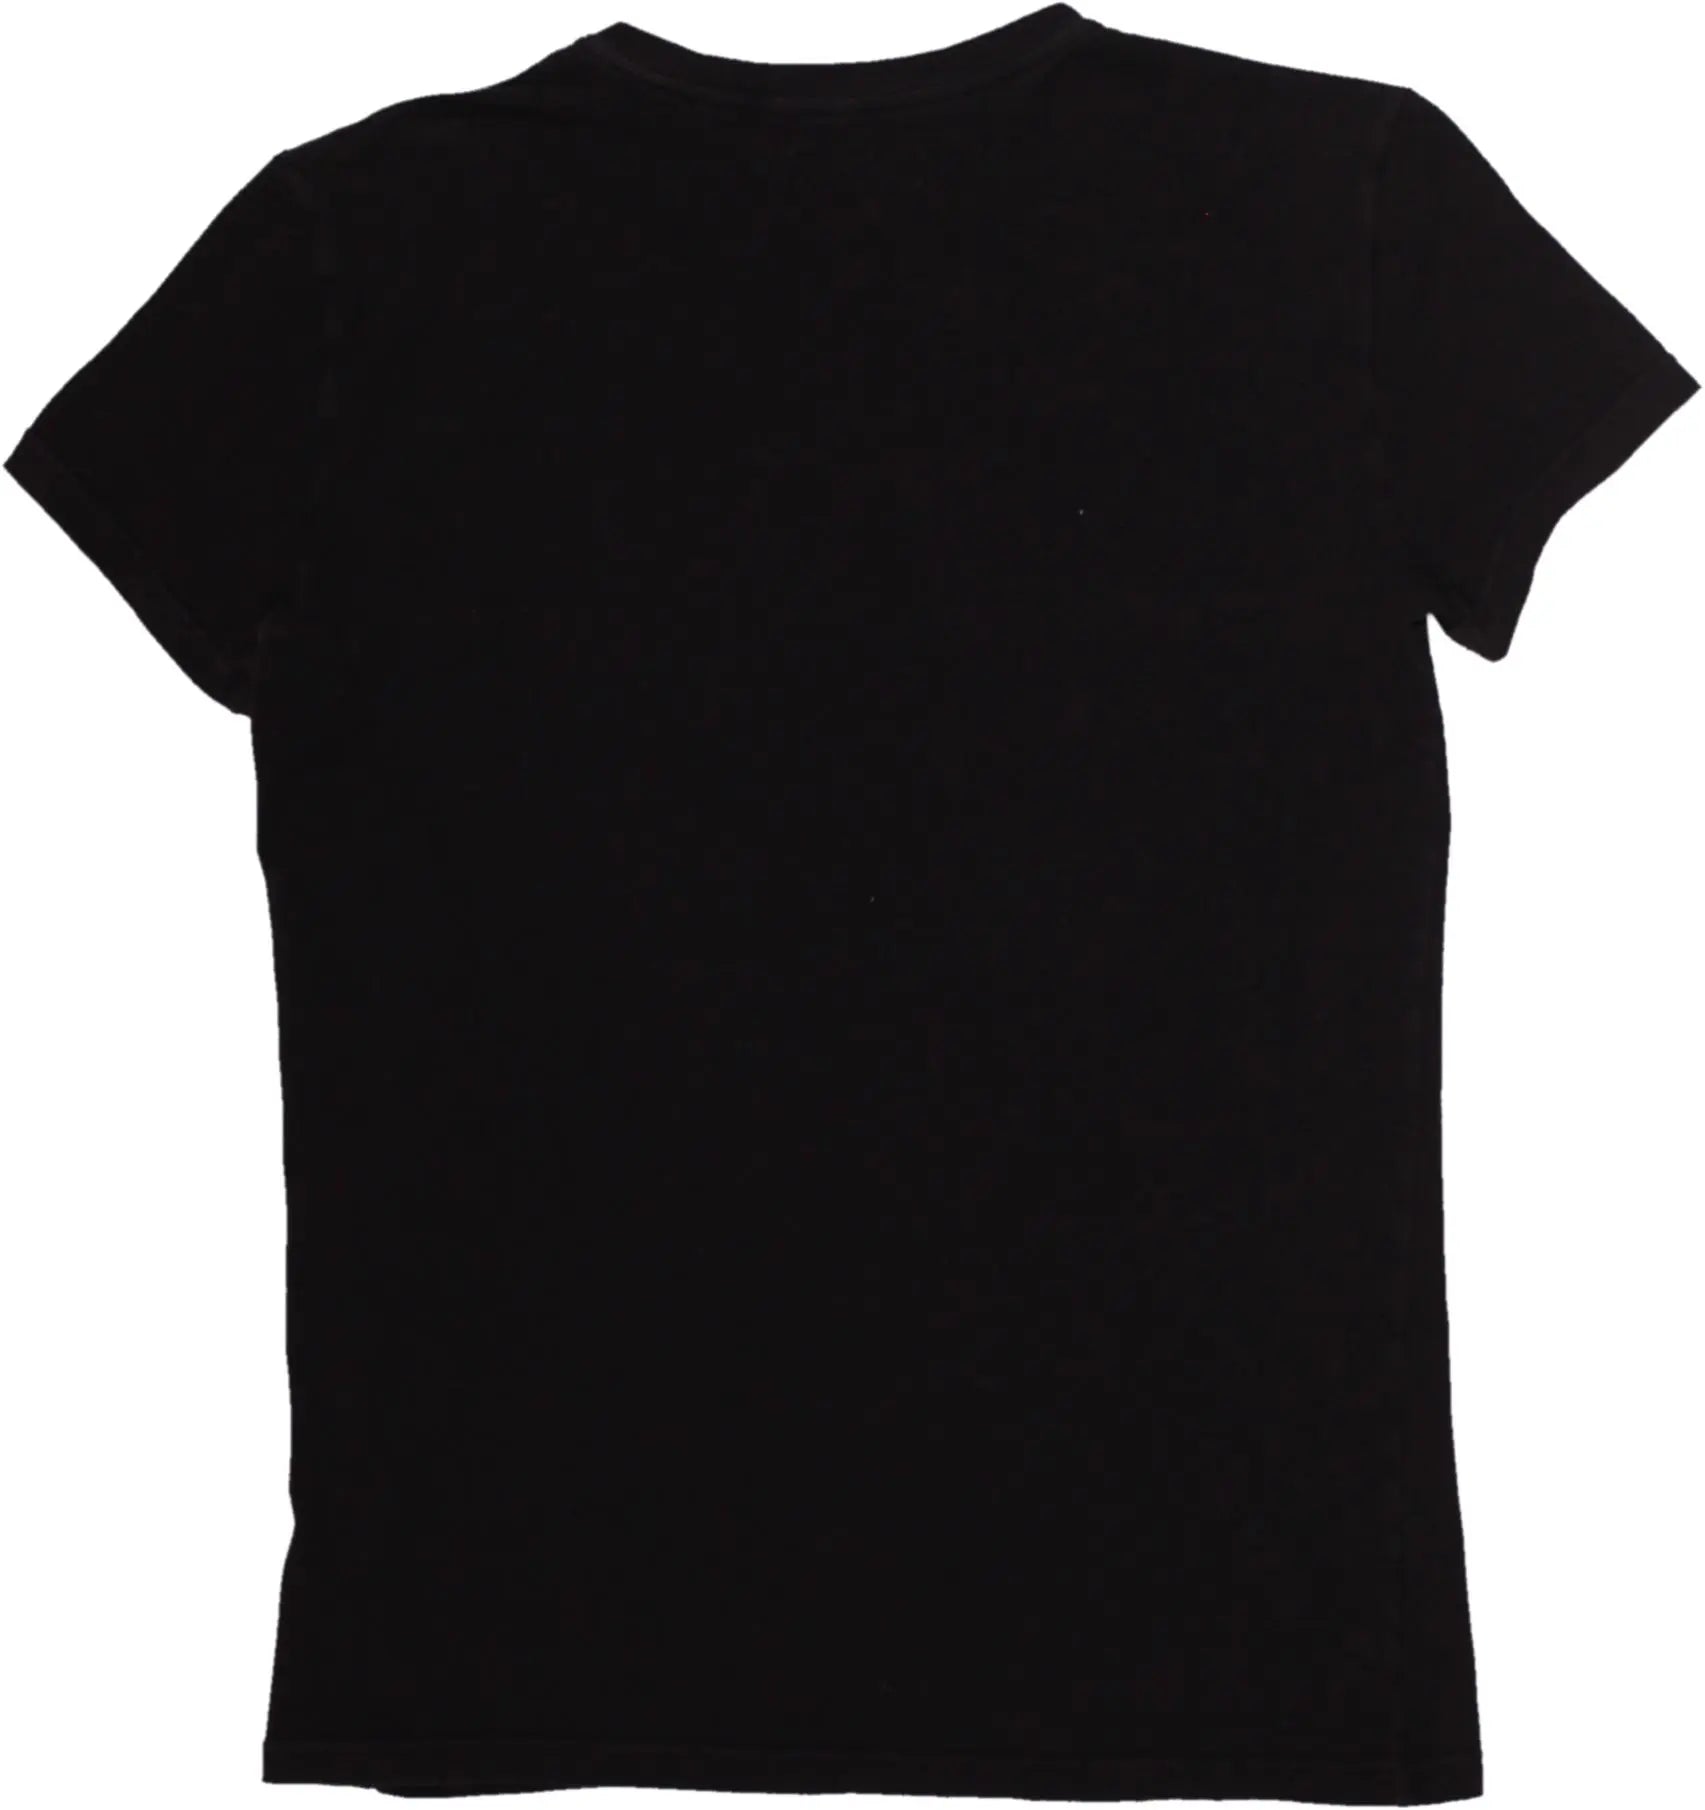 Emporio Armani - Emporio Armani Black T-shirt- ThriftTale.com - Vintage and second handclothing